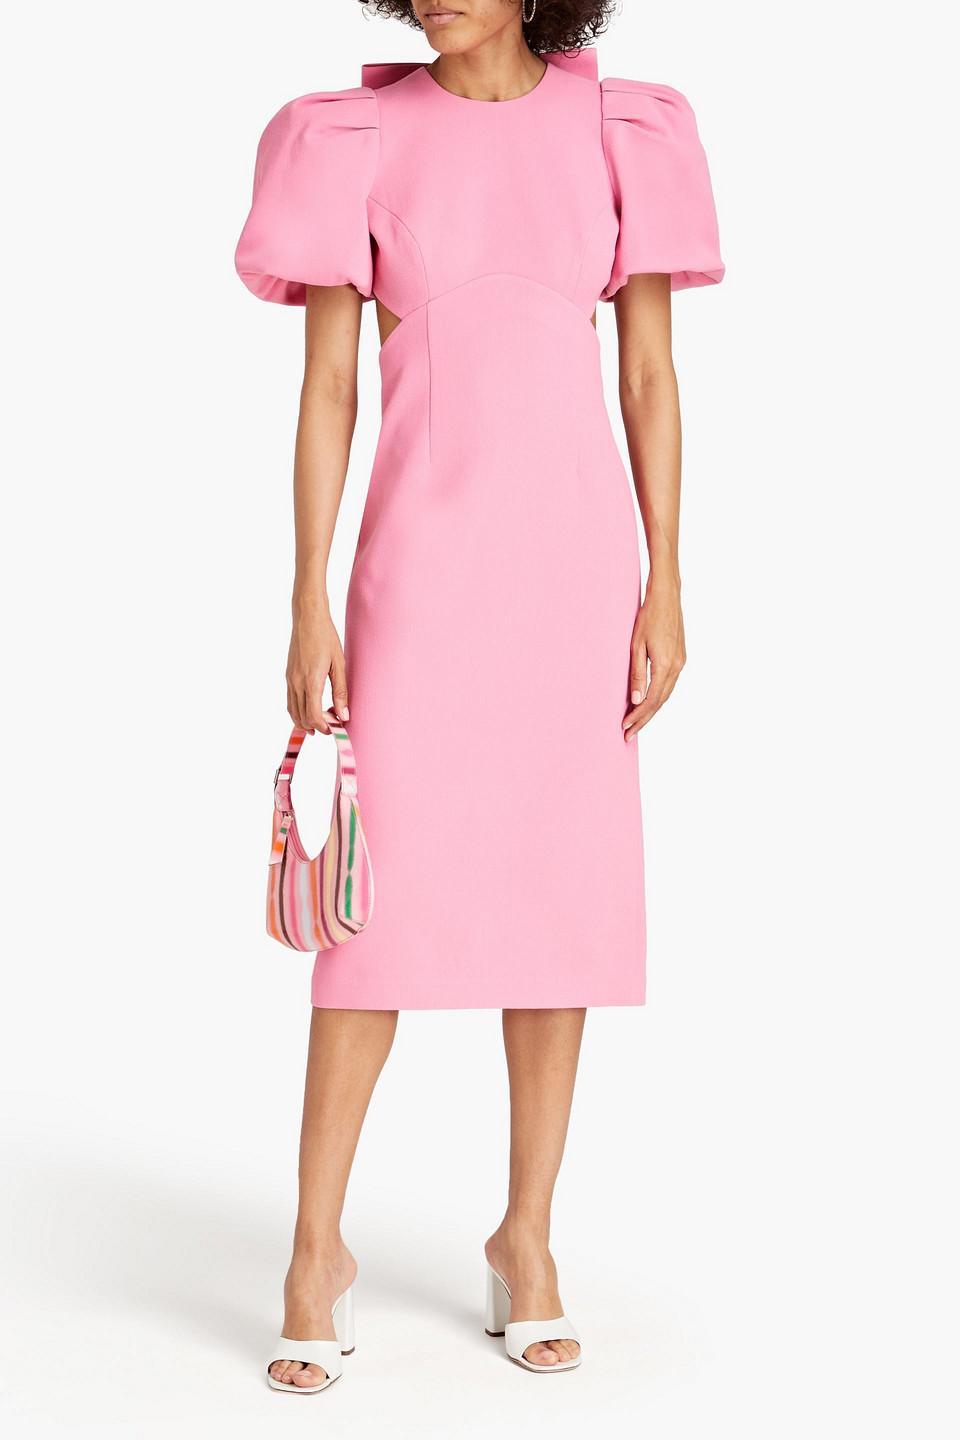 Knit Pink Bows - Custom Emmie Dress